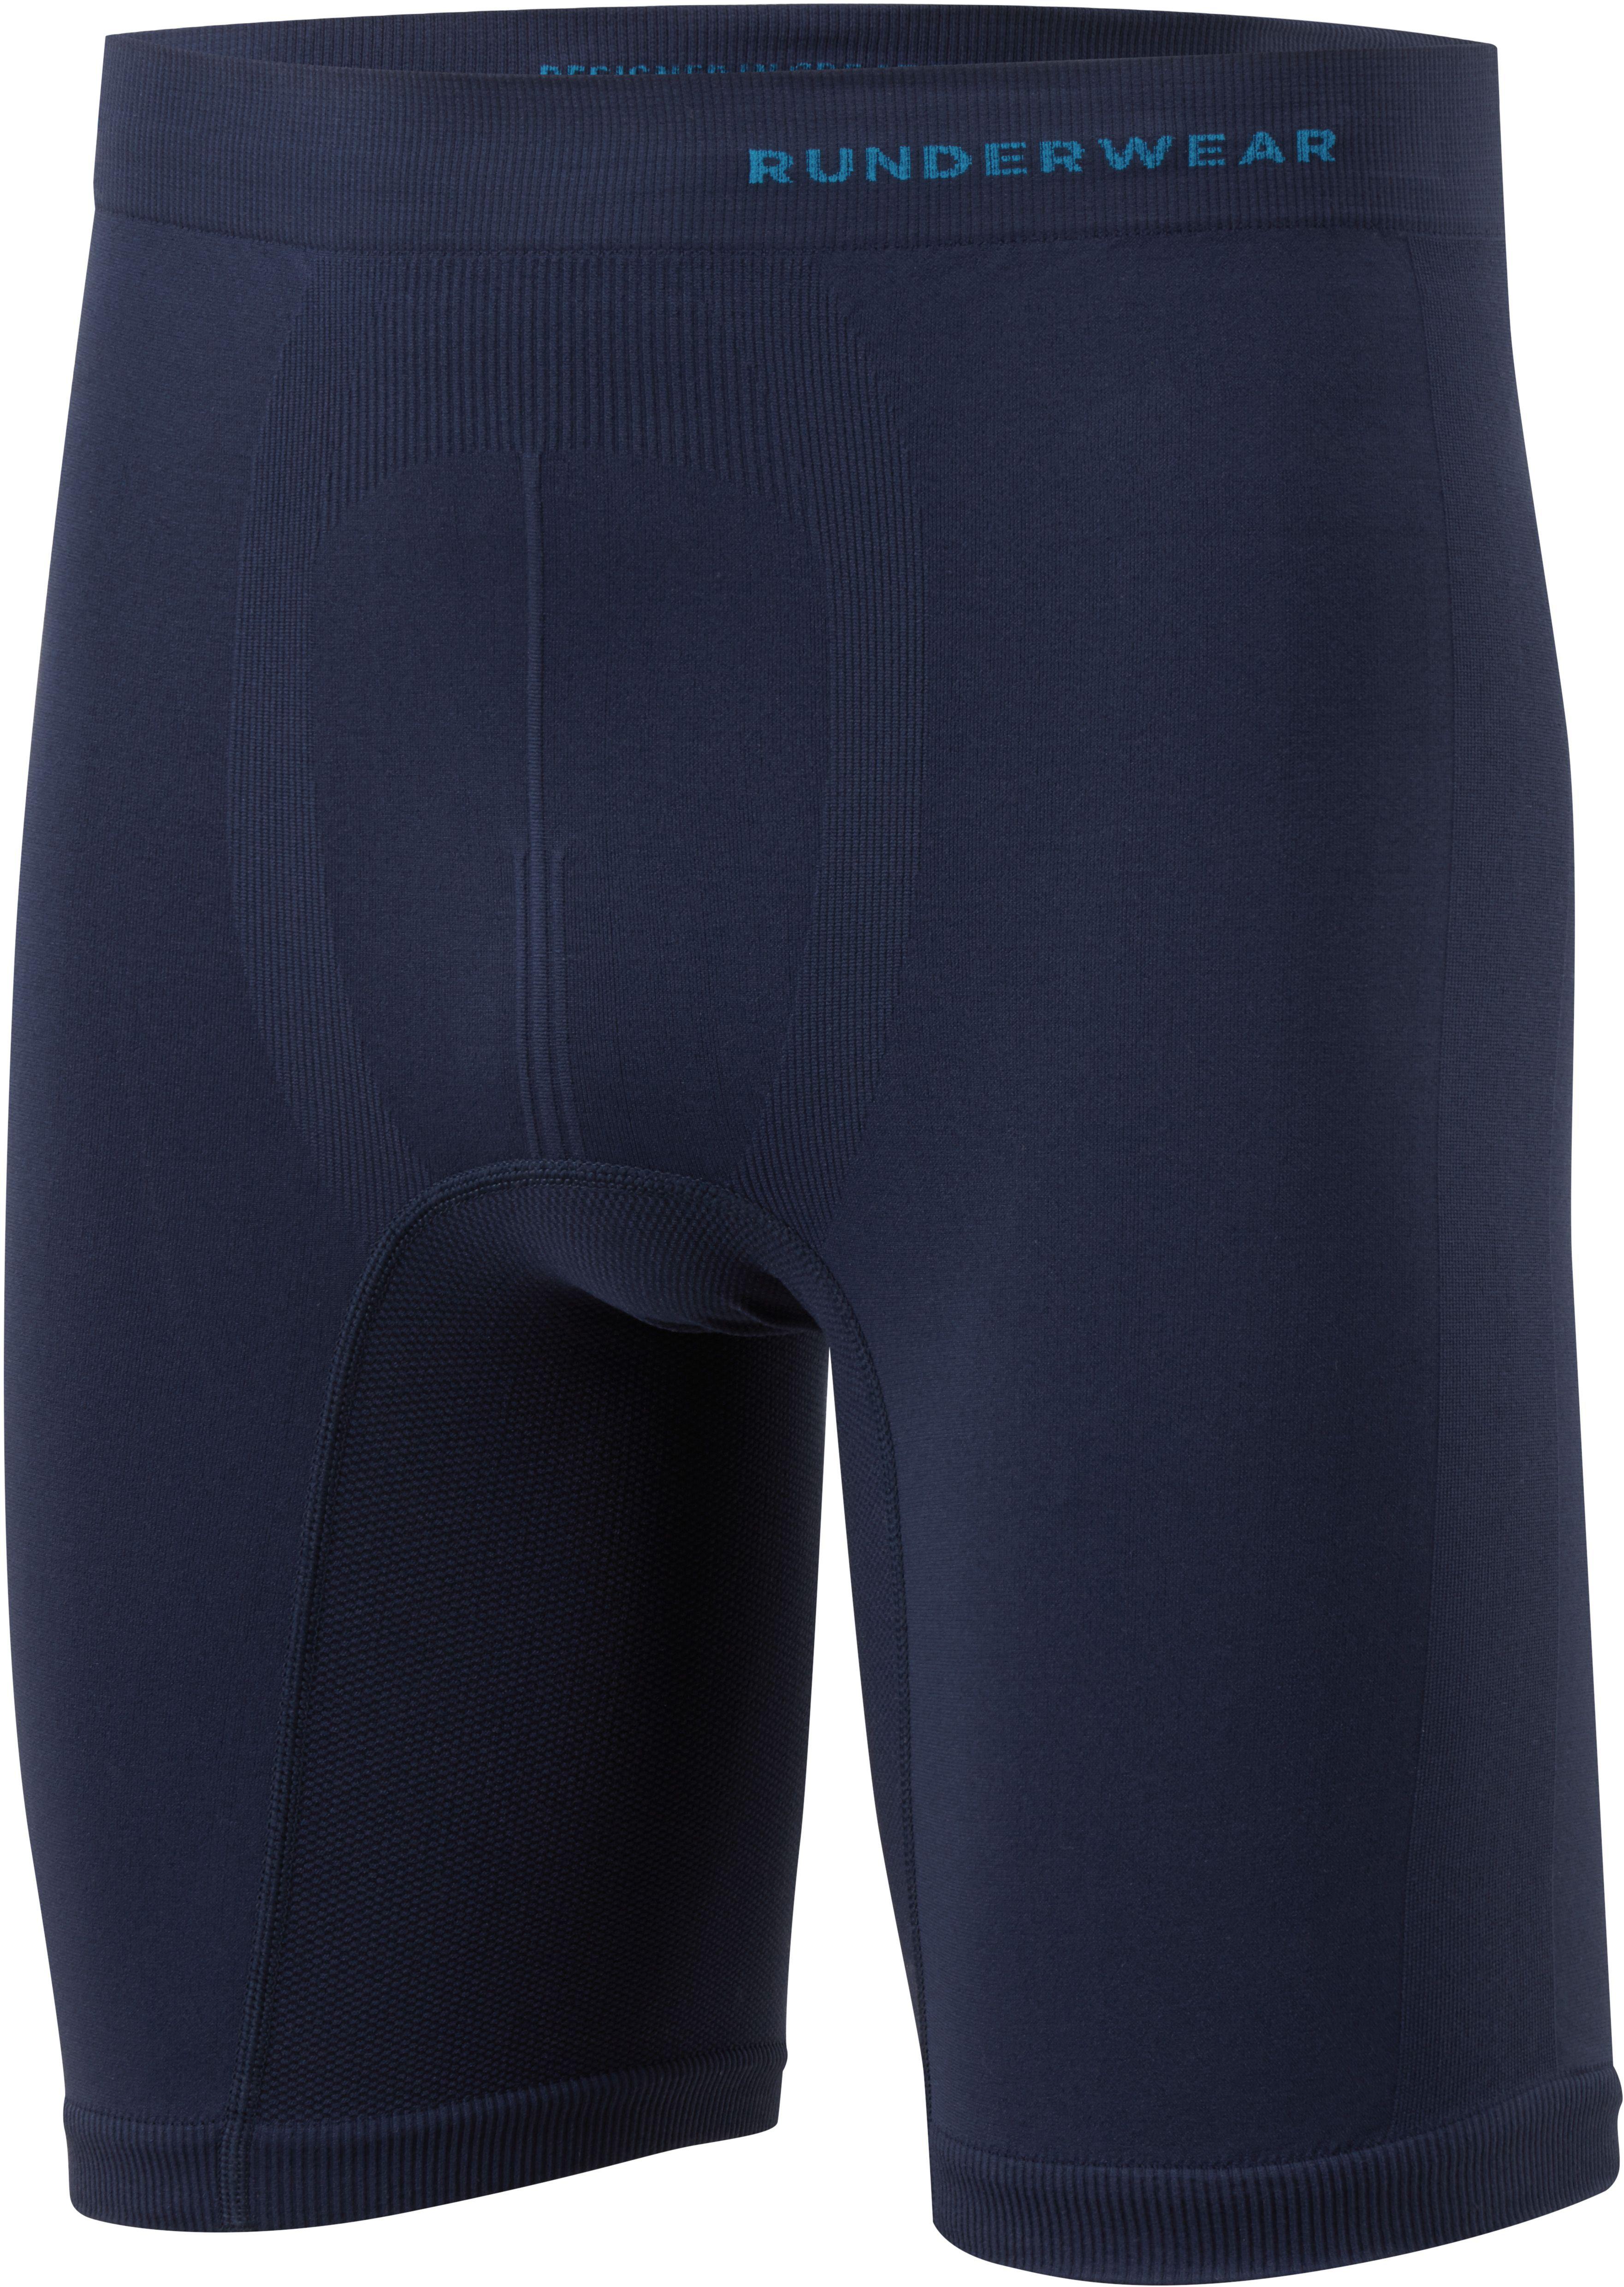 Image of Runderwear Men's Long Boxer Shorts - Navy/Navy